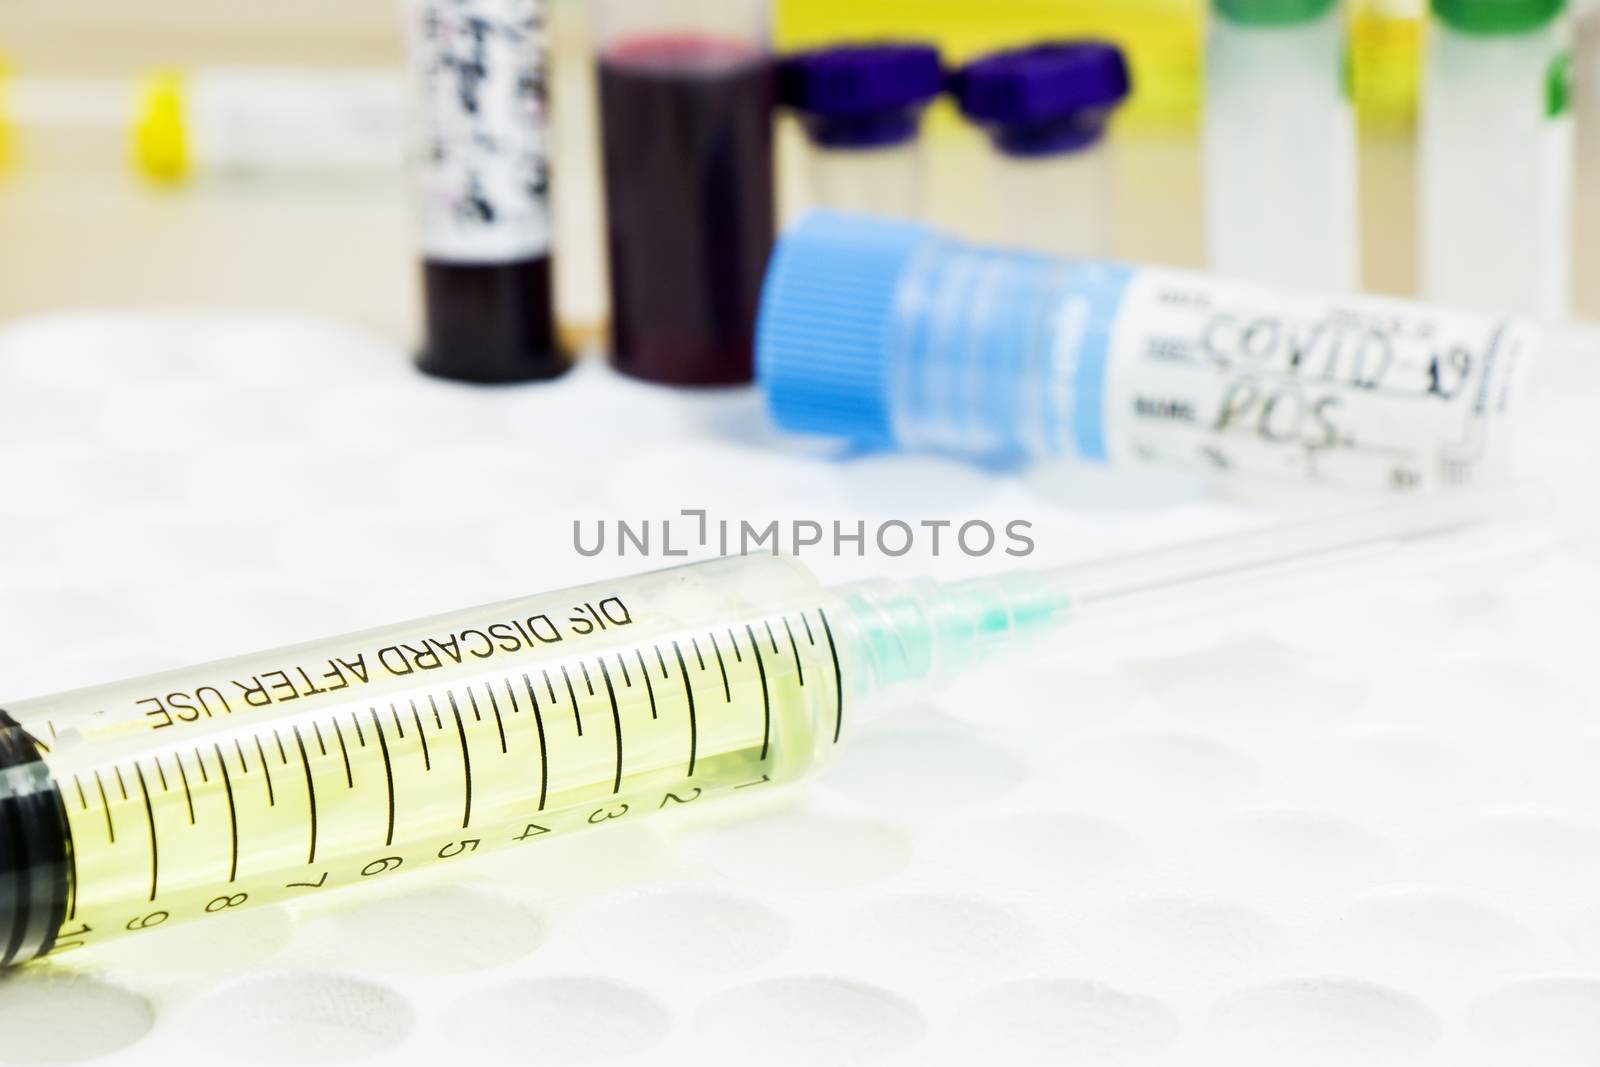 Medical needle and blood tube, corona virus or covid-19 vaccine. by Taidundua